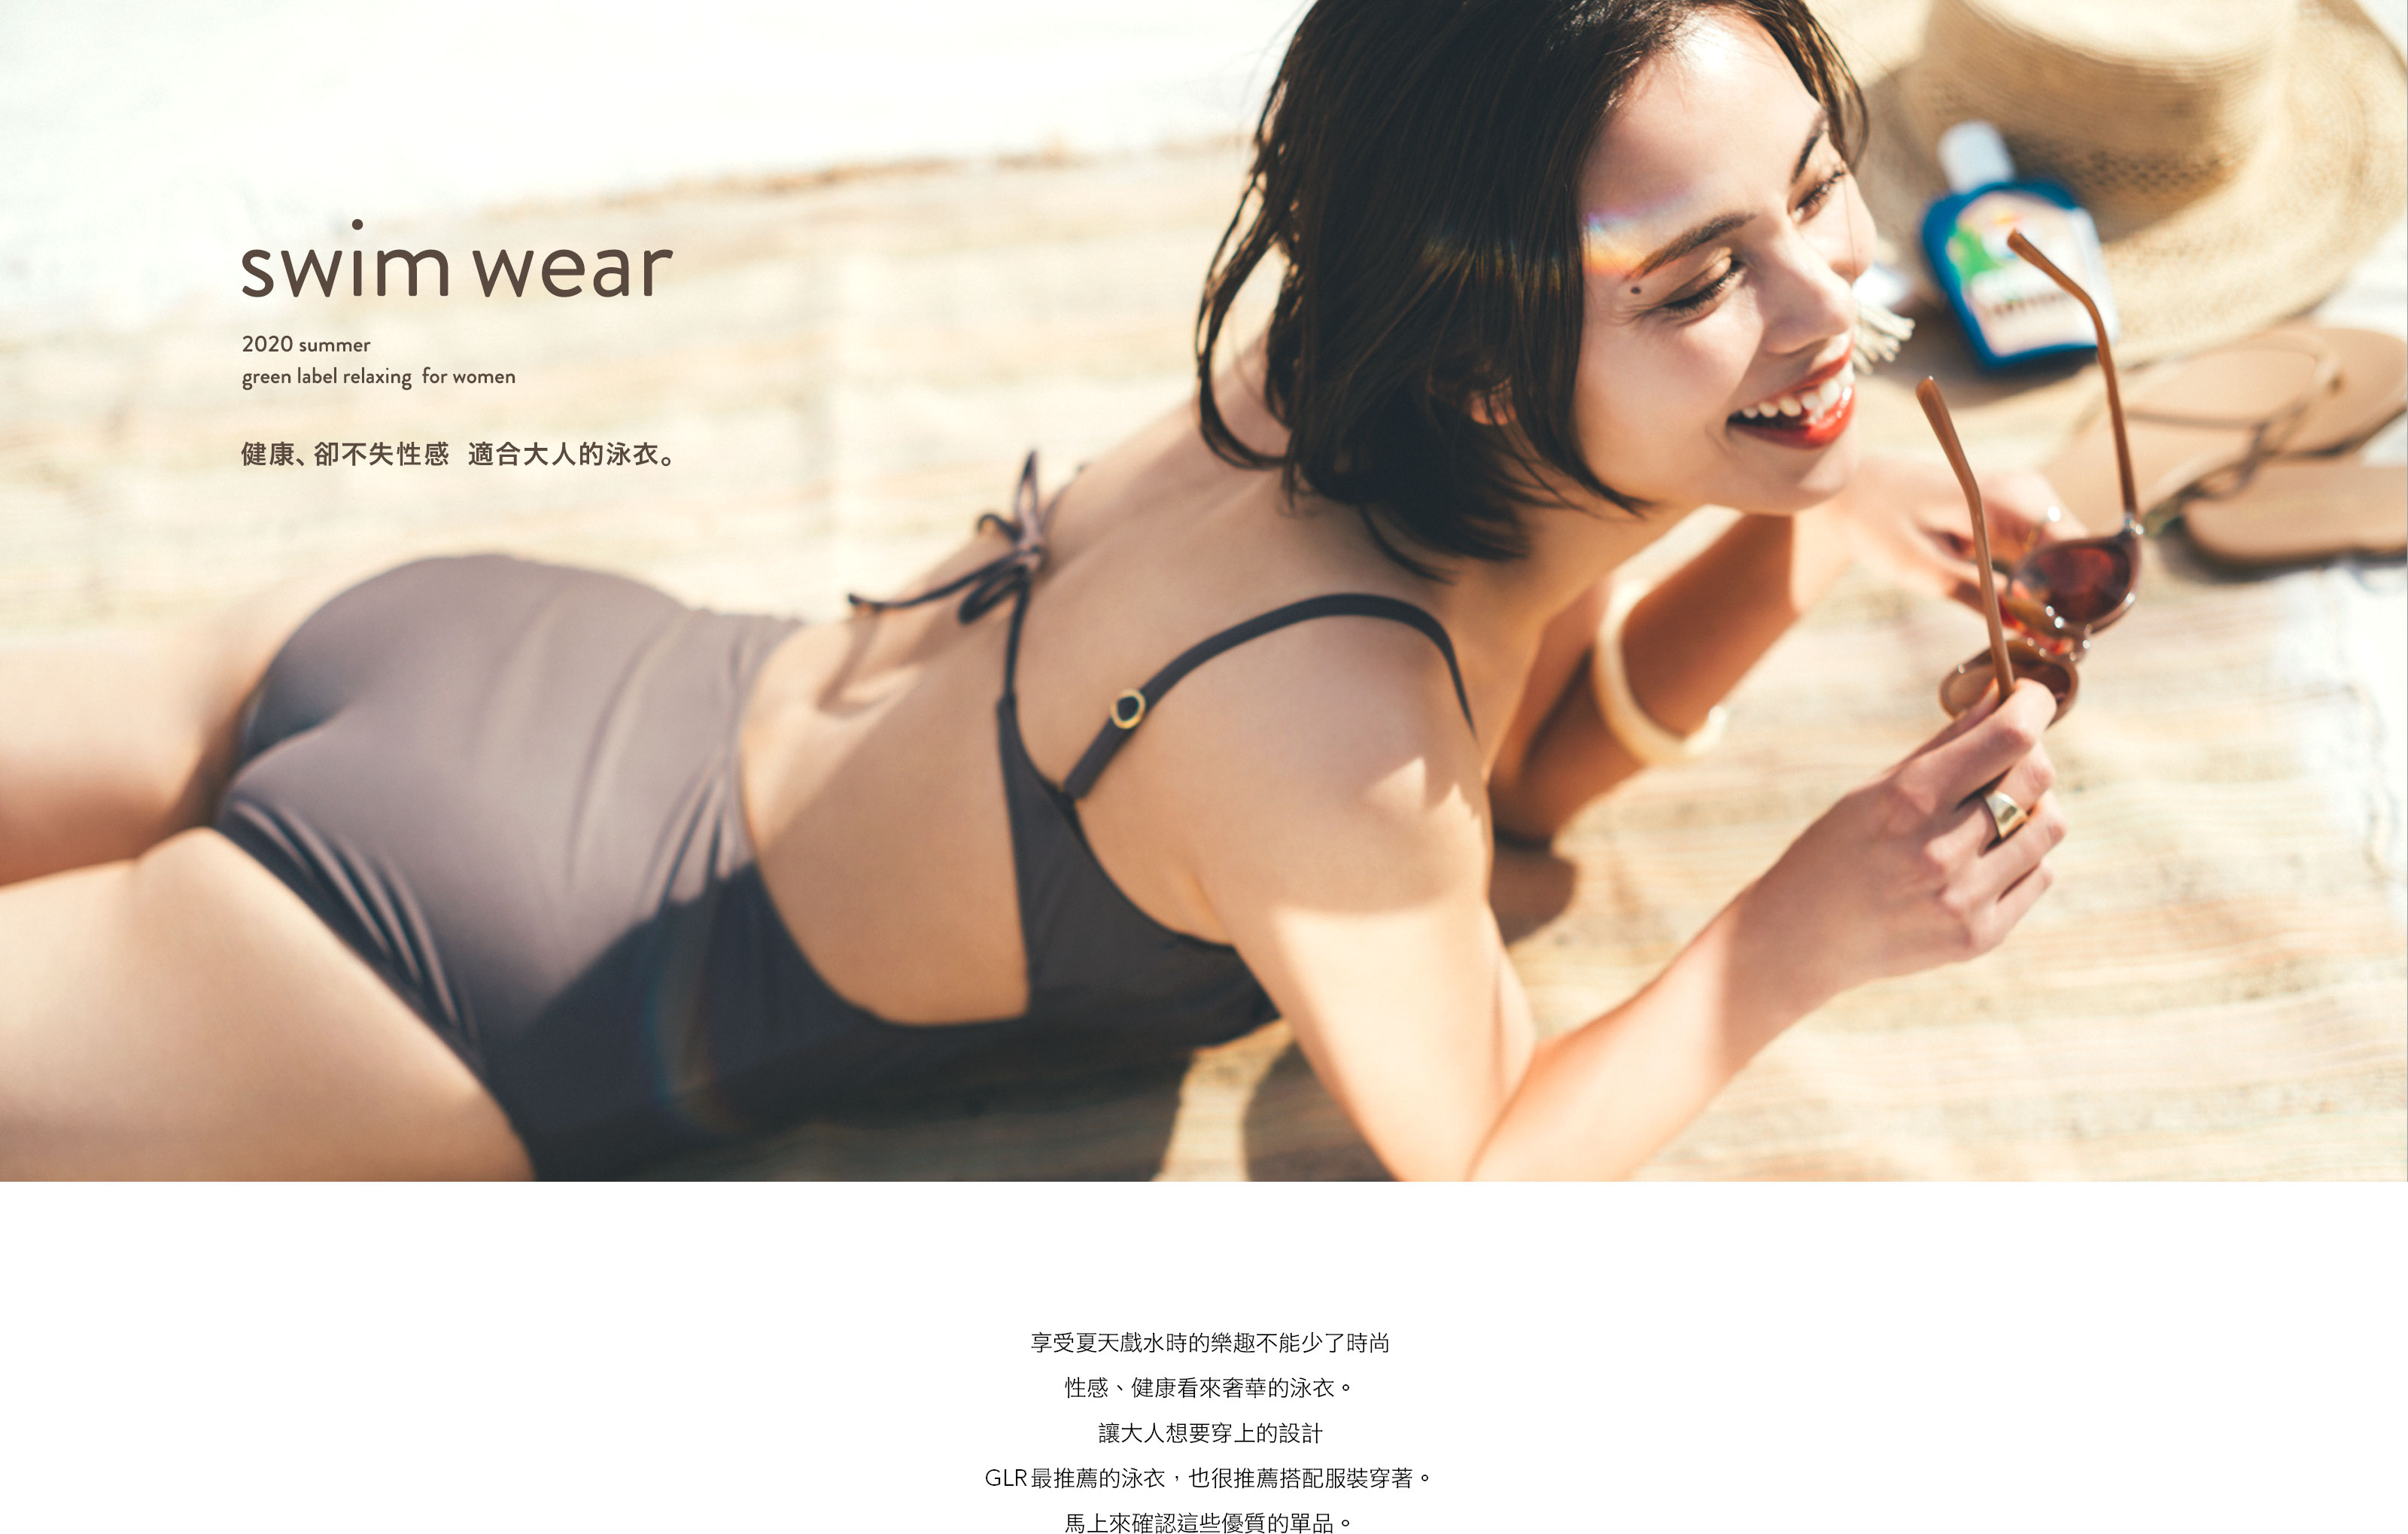 swimwear 2020 summer green label relaxing for women TAIWAN